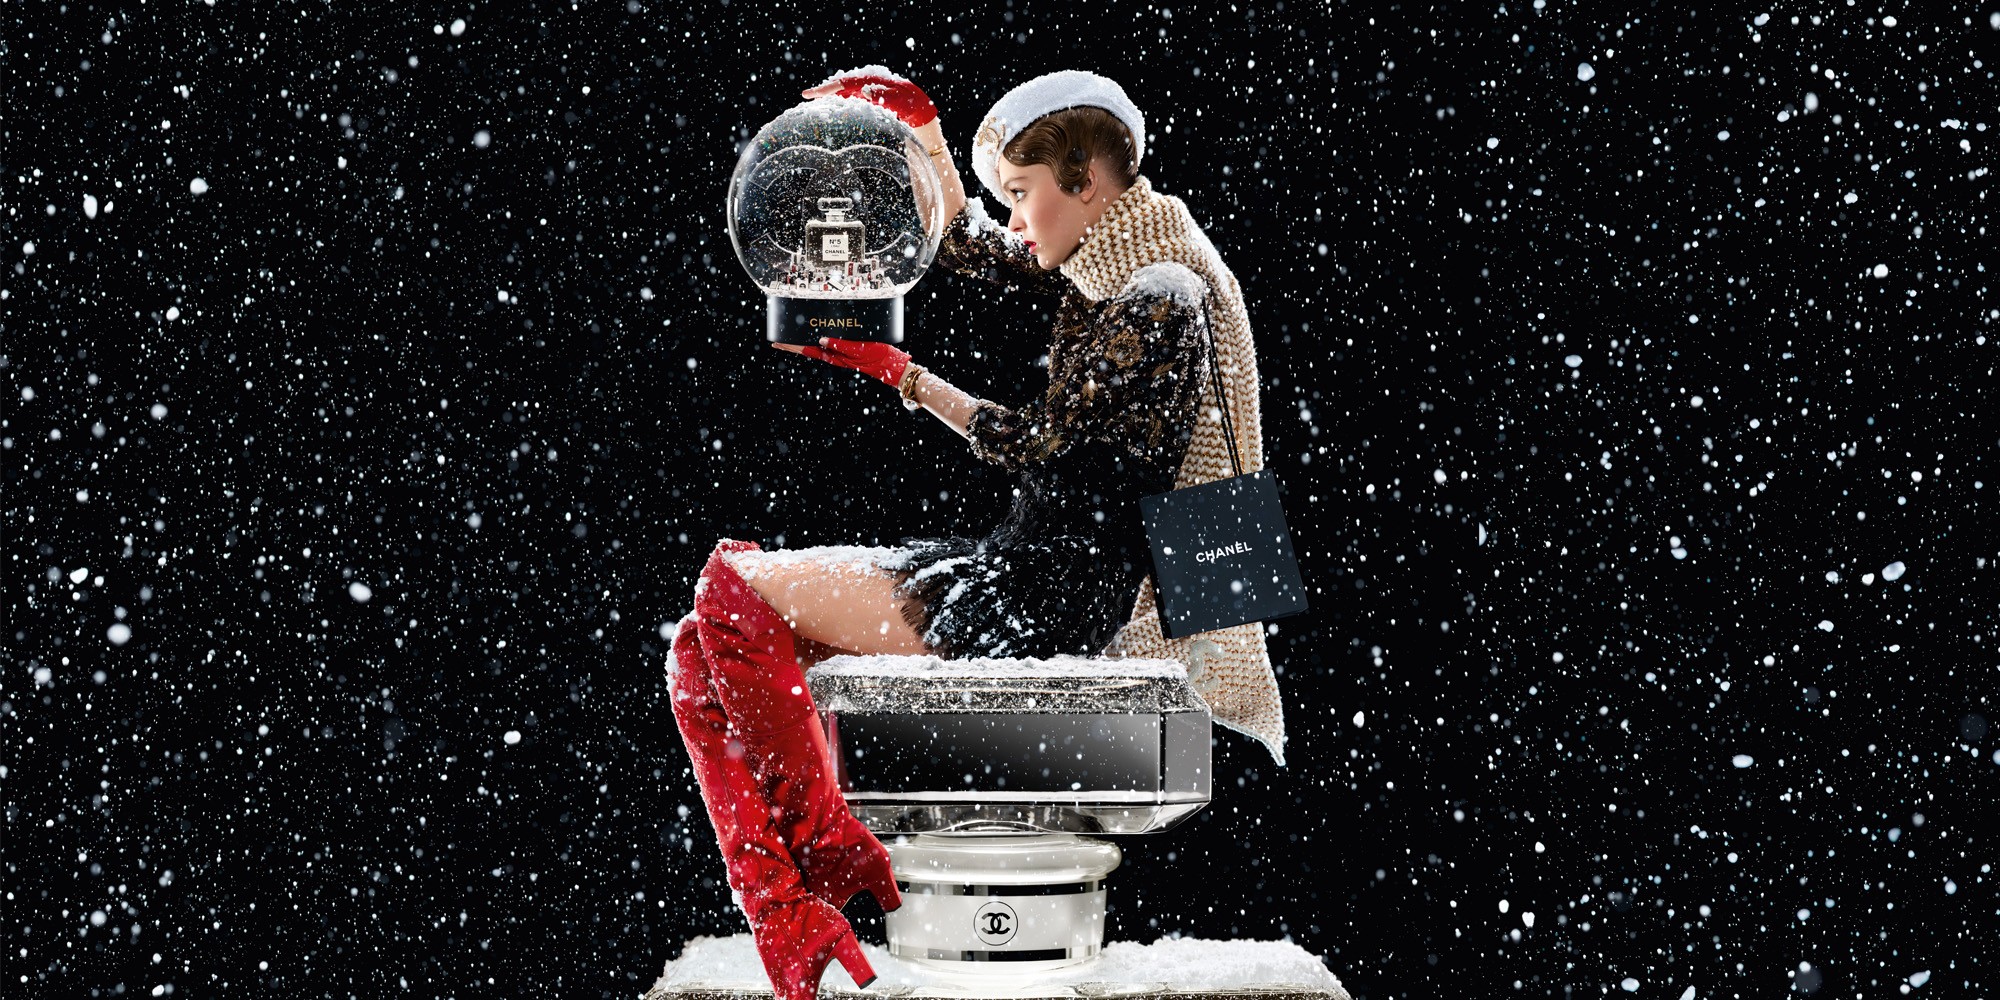 Chanel No. 5 L'Eau Holiday 2019 Fragrance Film Starring Lily-Rose Depp